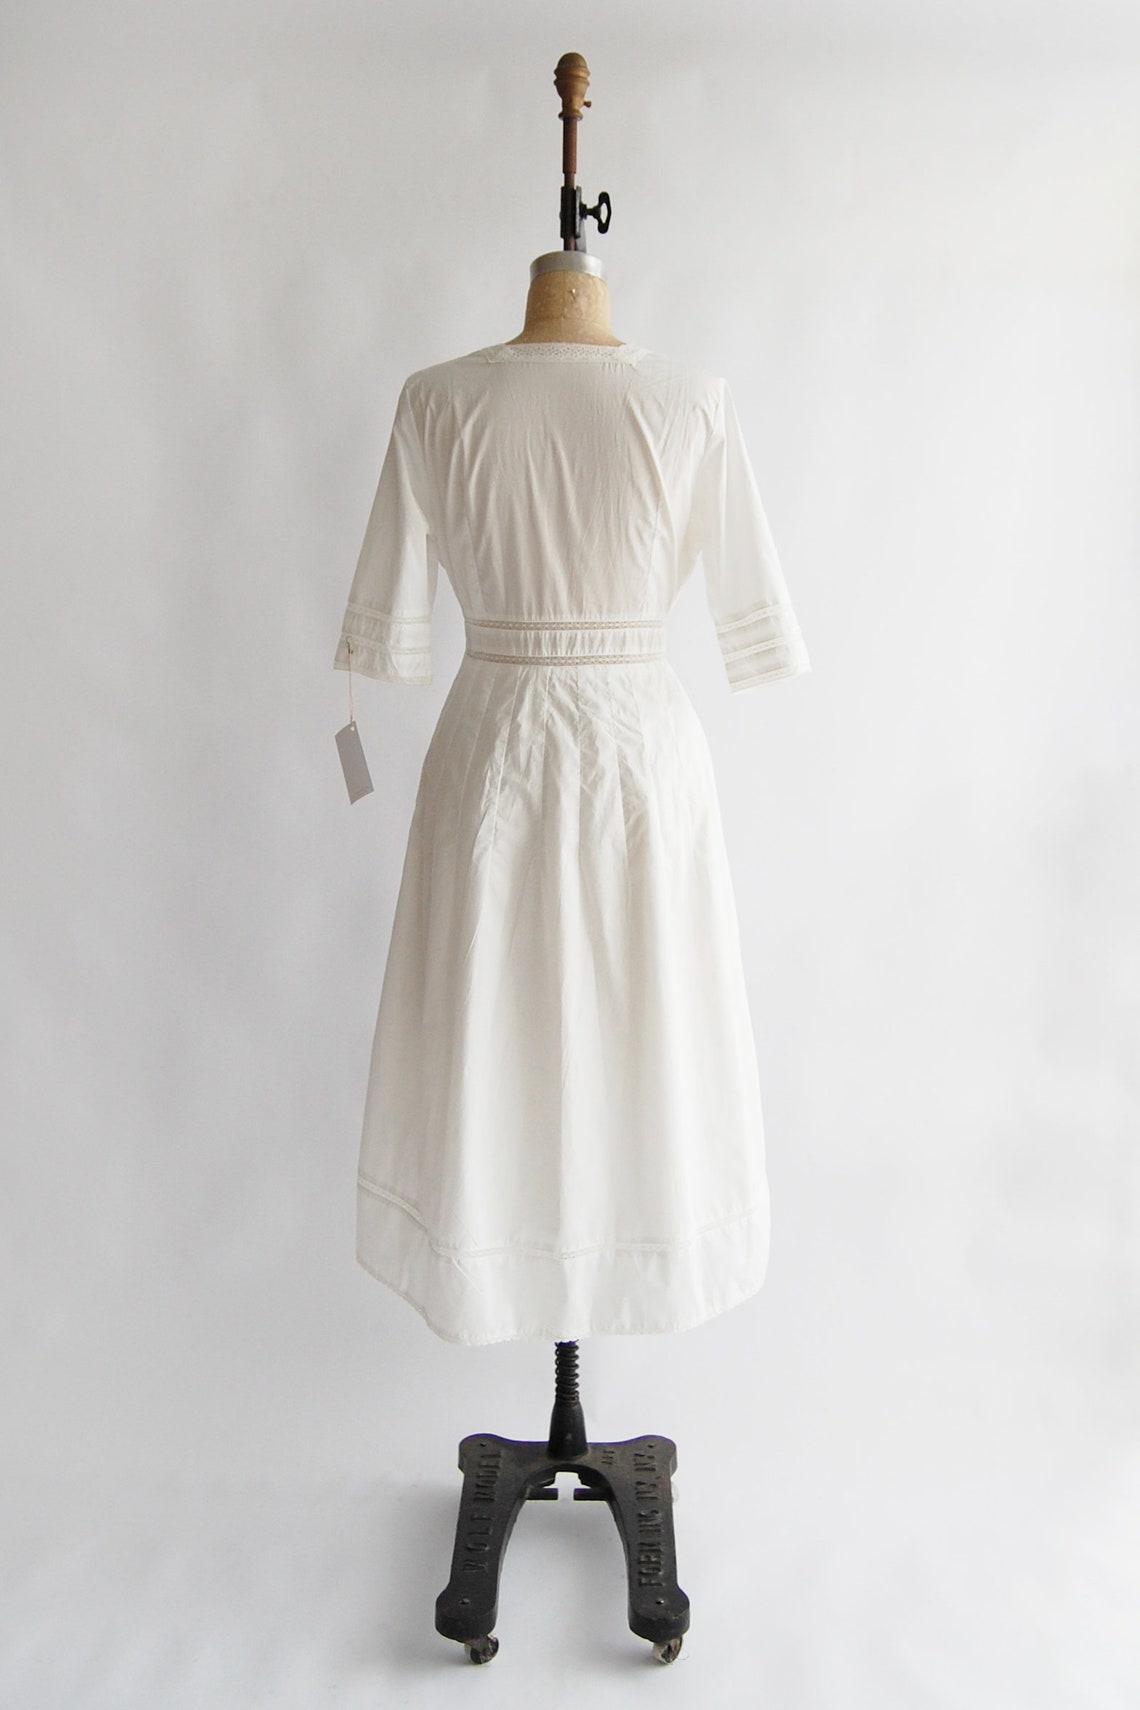 Contes d'Edwardian Dress vintage inspired white cotton | Etsy